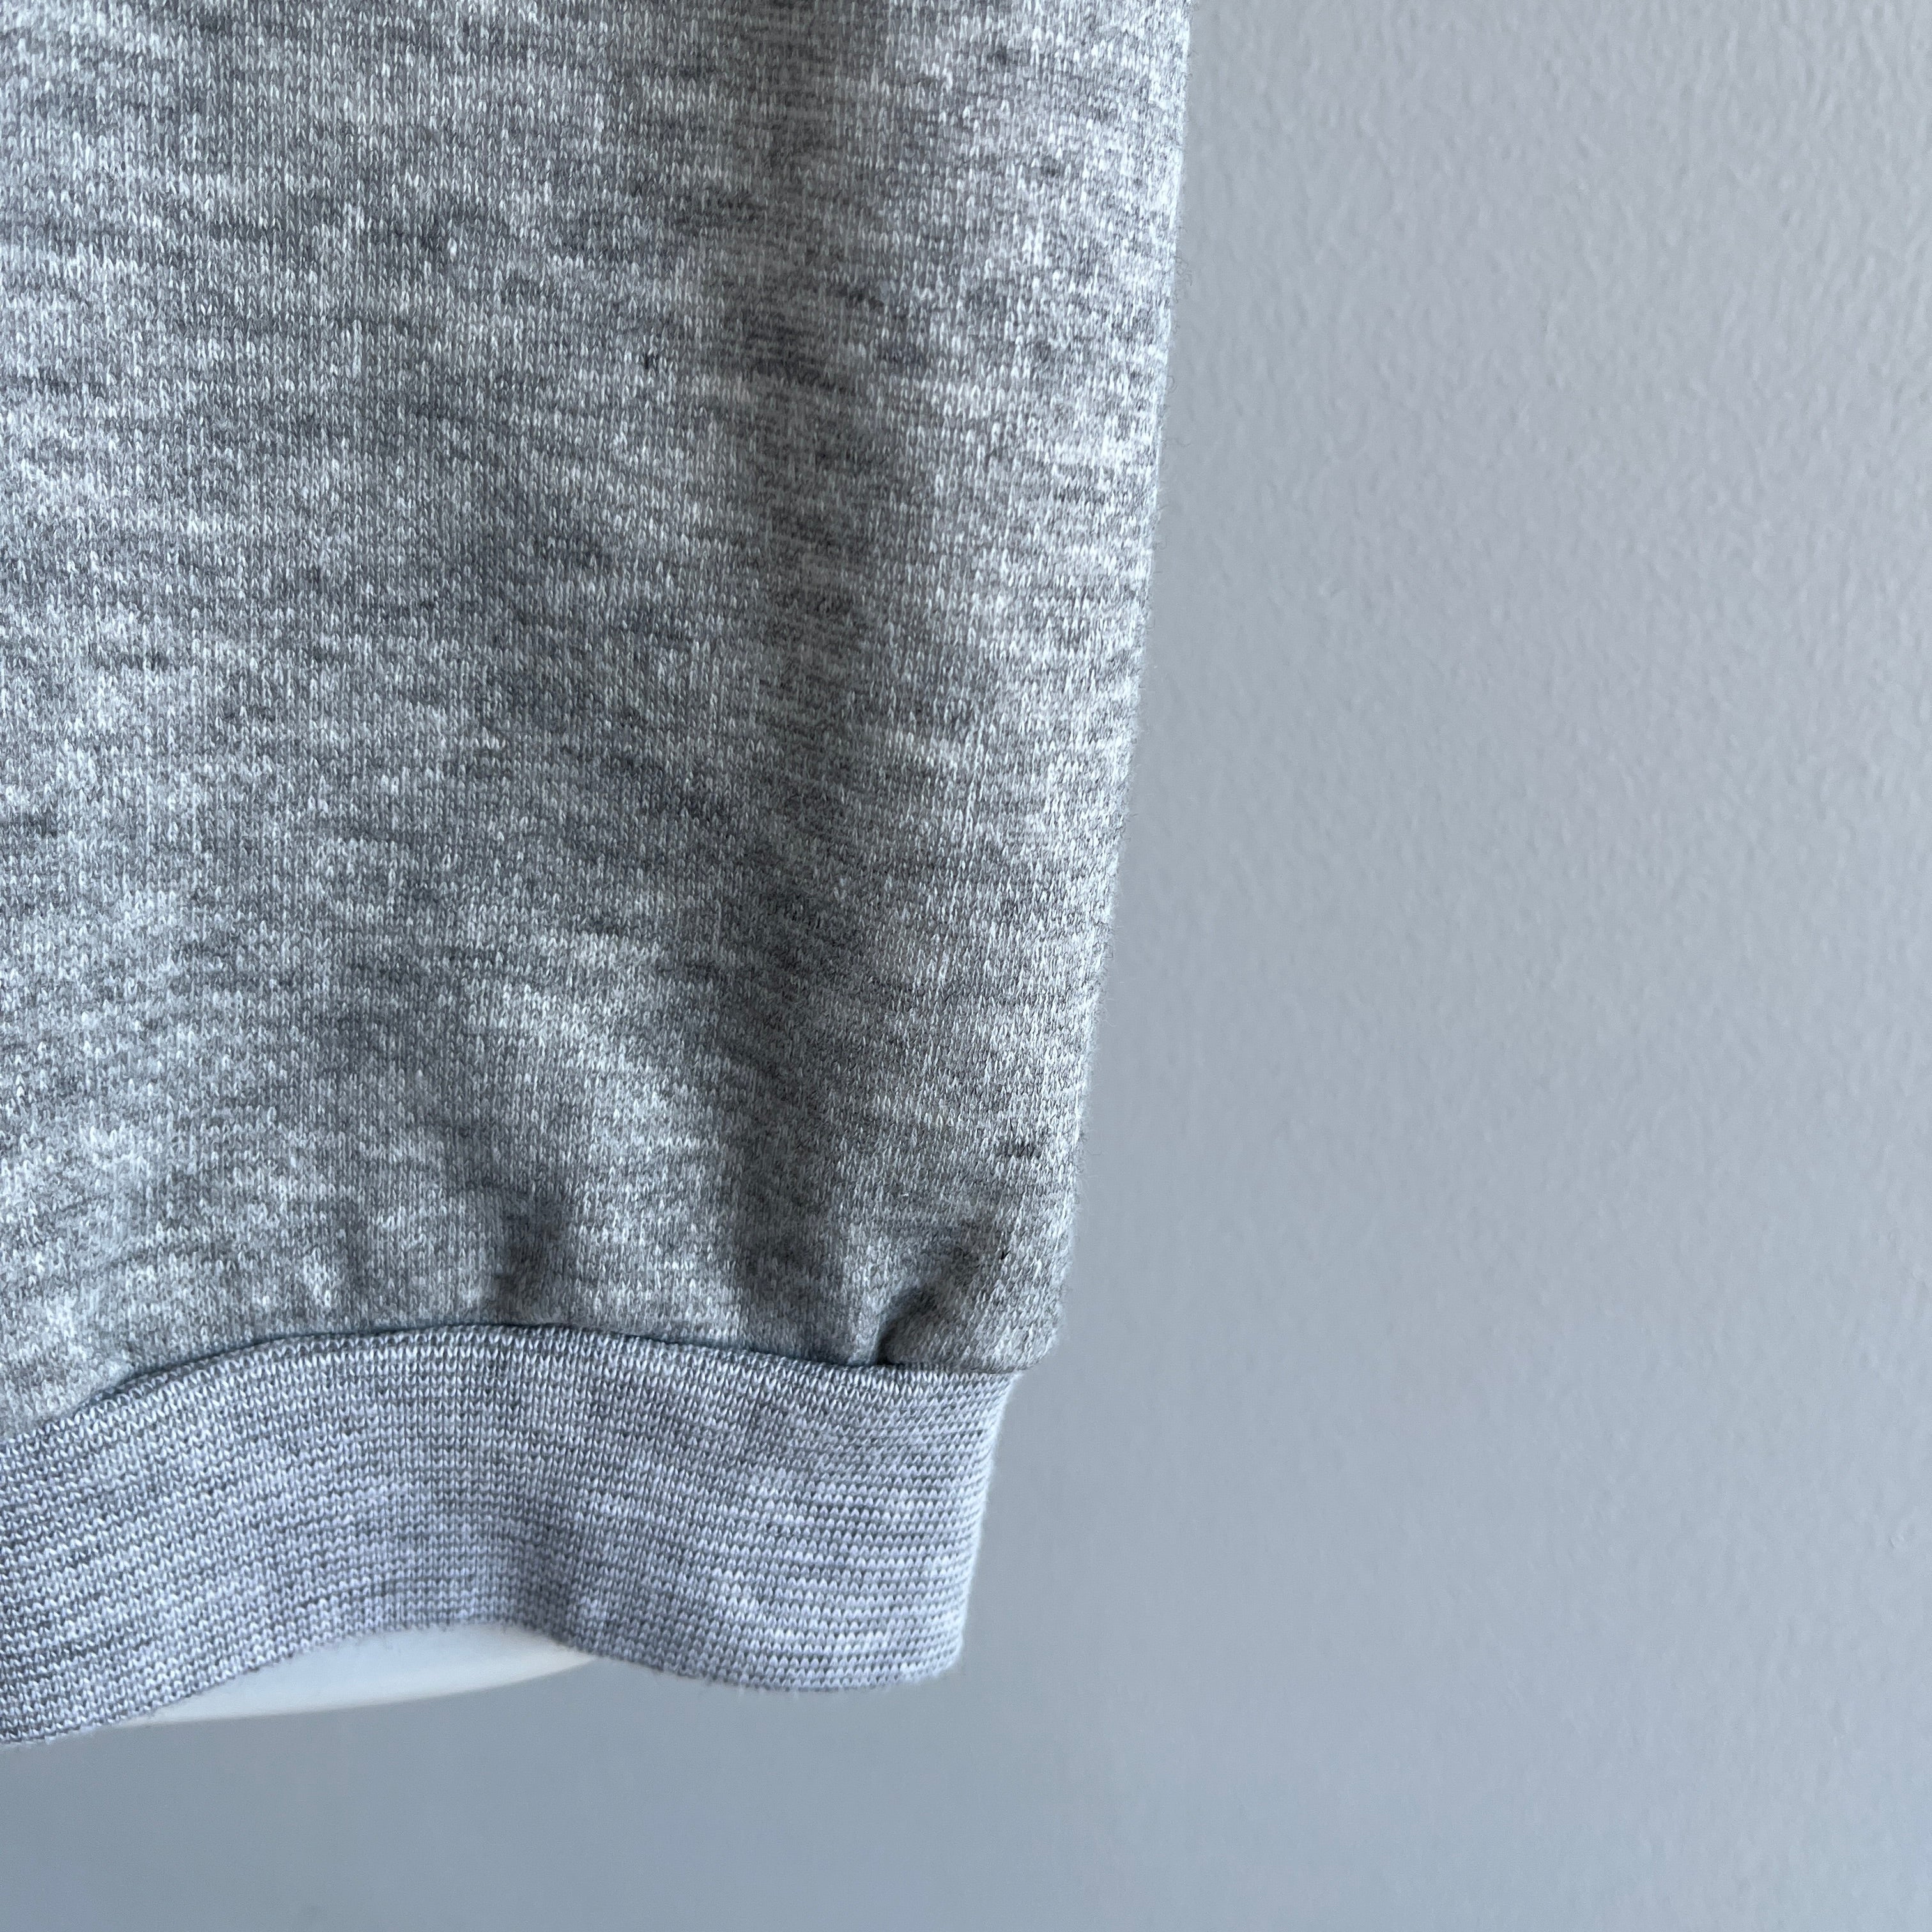 1980s Barely/Never? Worn Blank Gray Warm Up Sweatshirt Vest